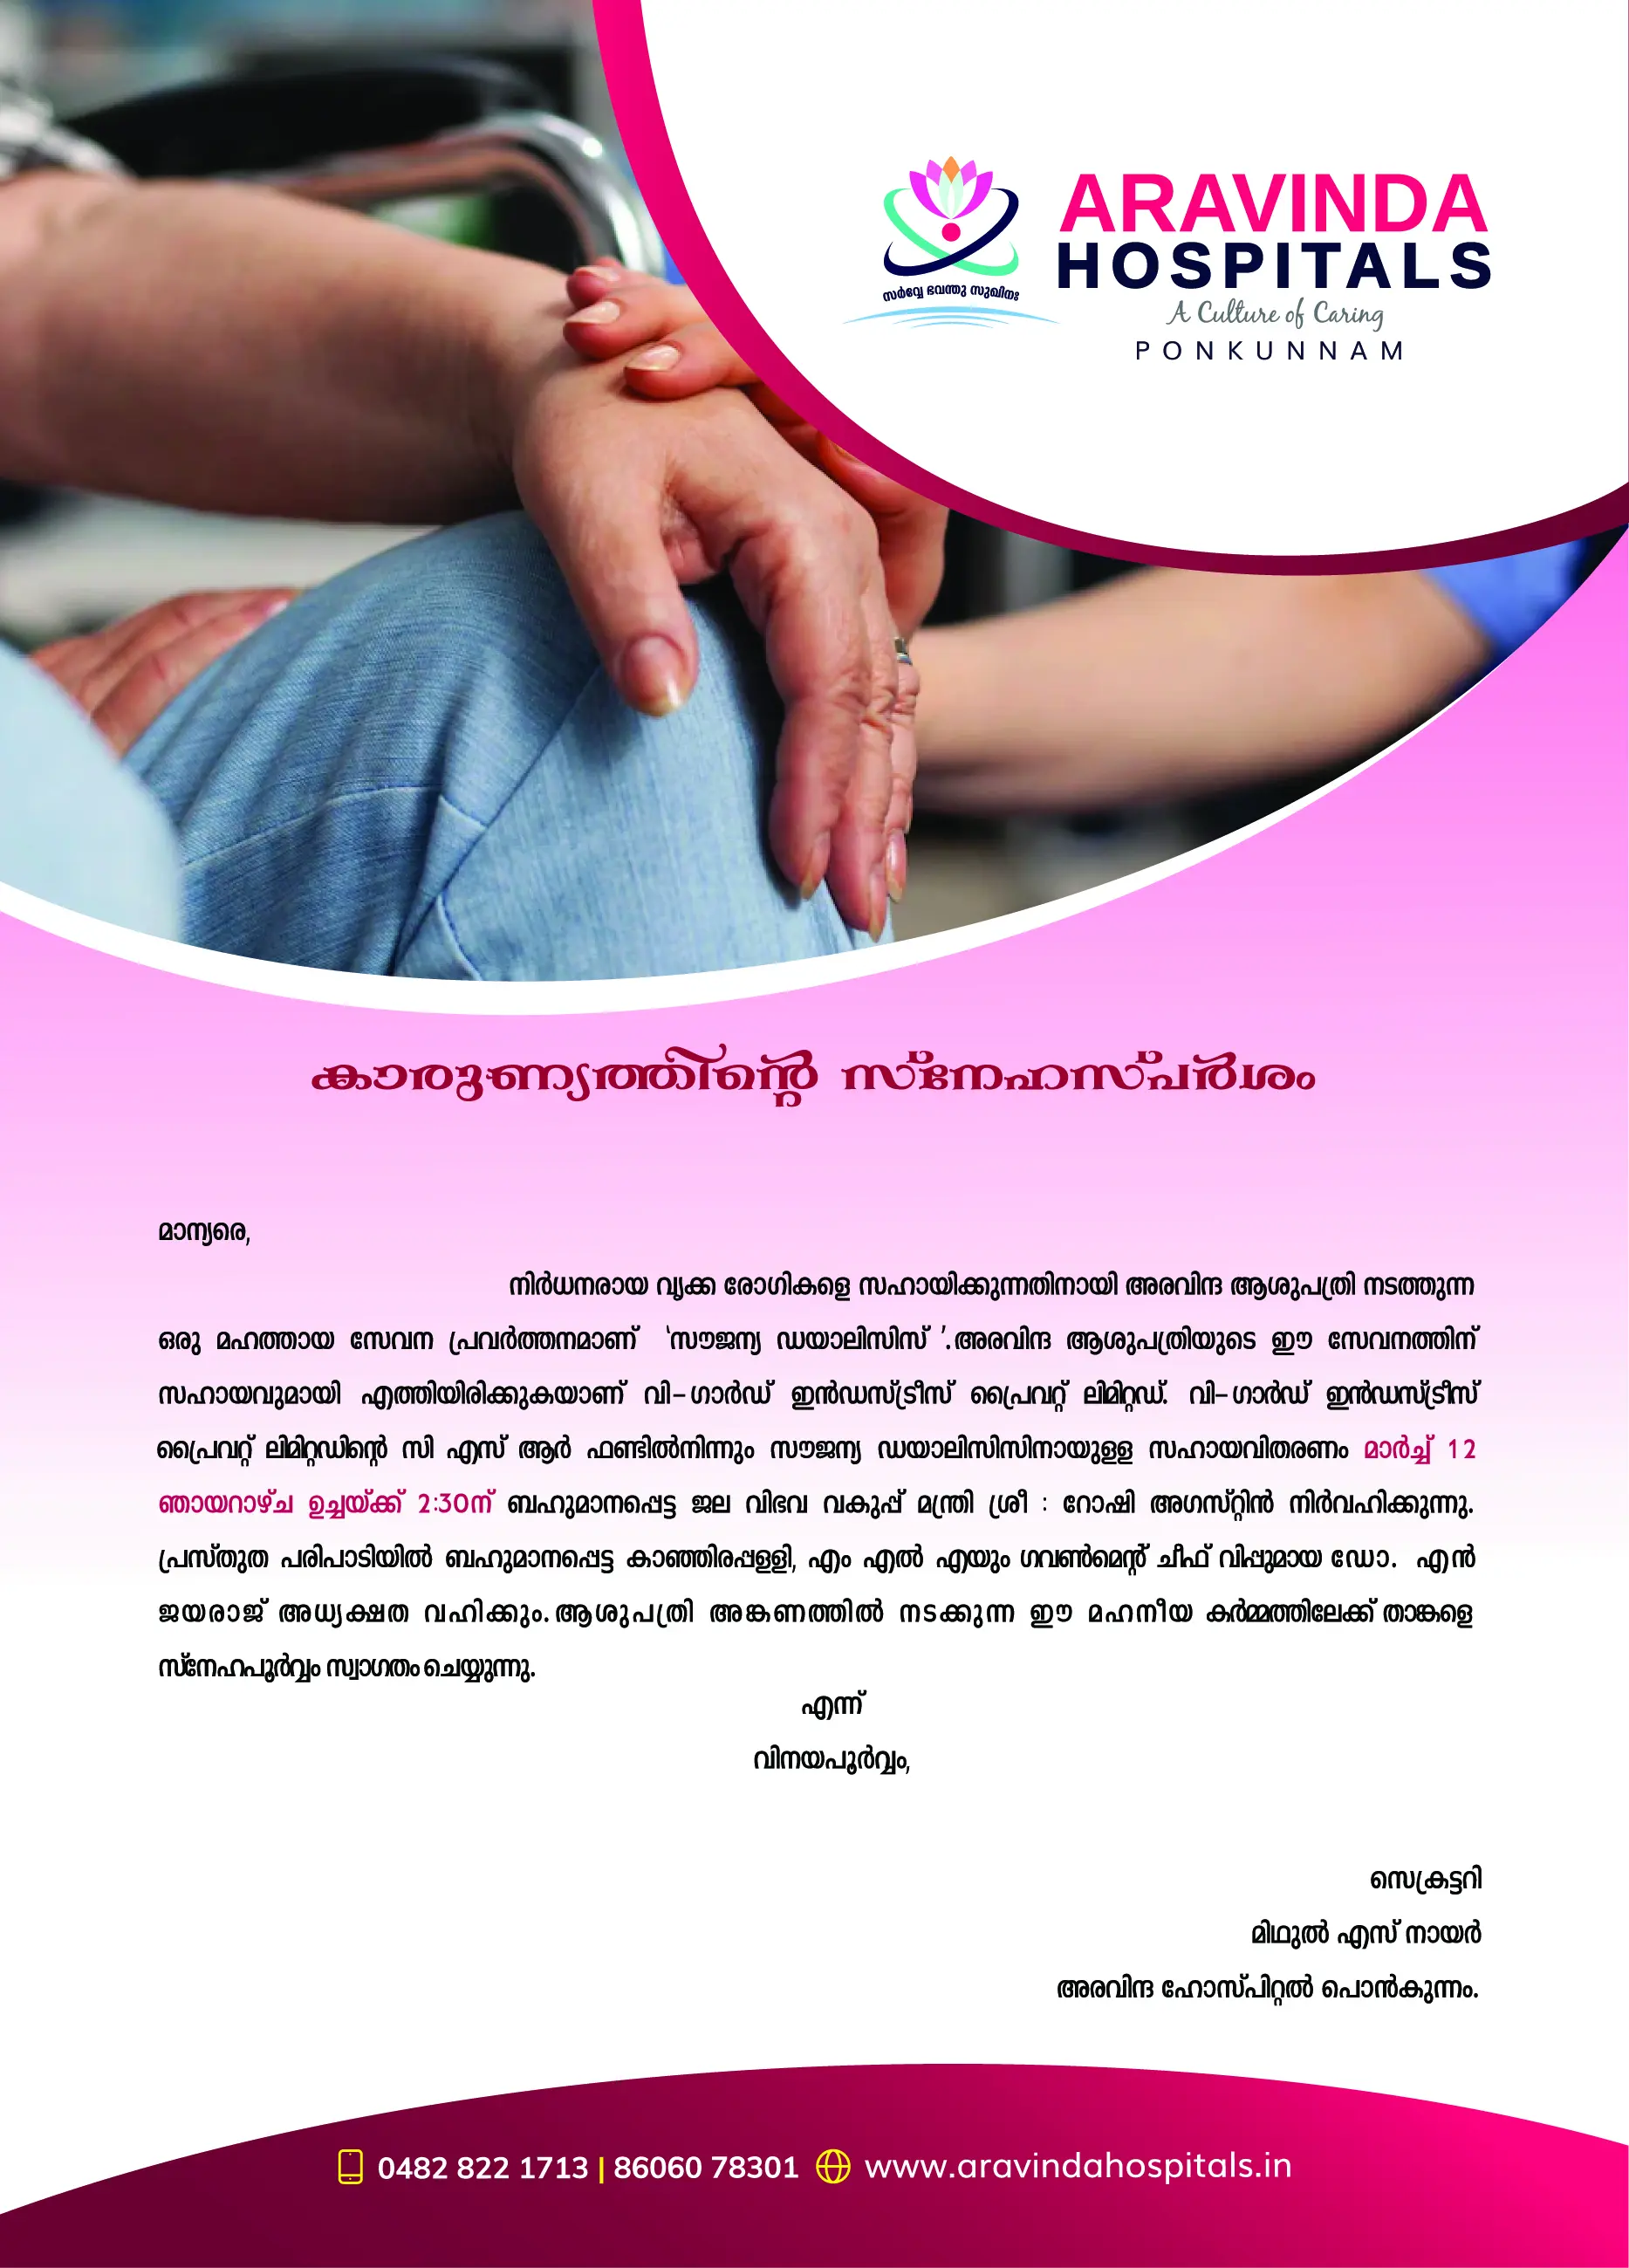 Free dialysis at Aravinda Hospital